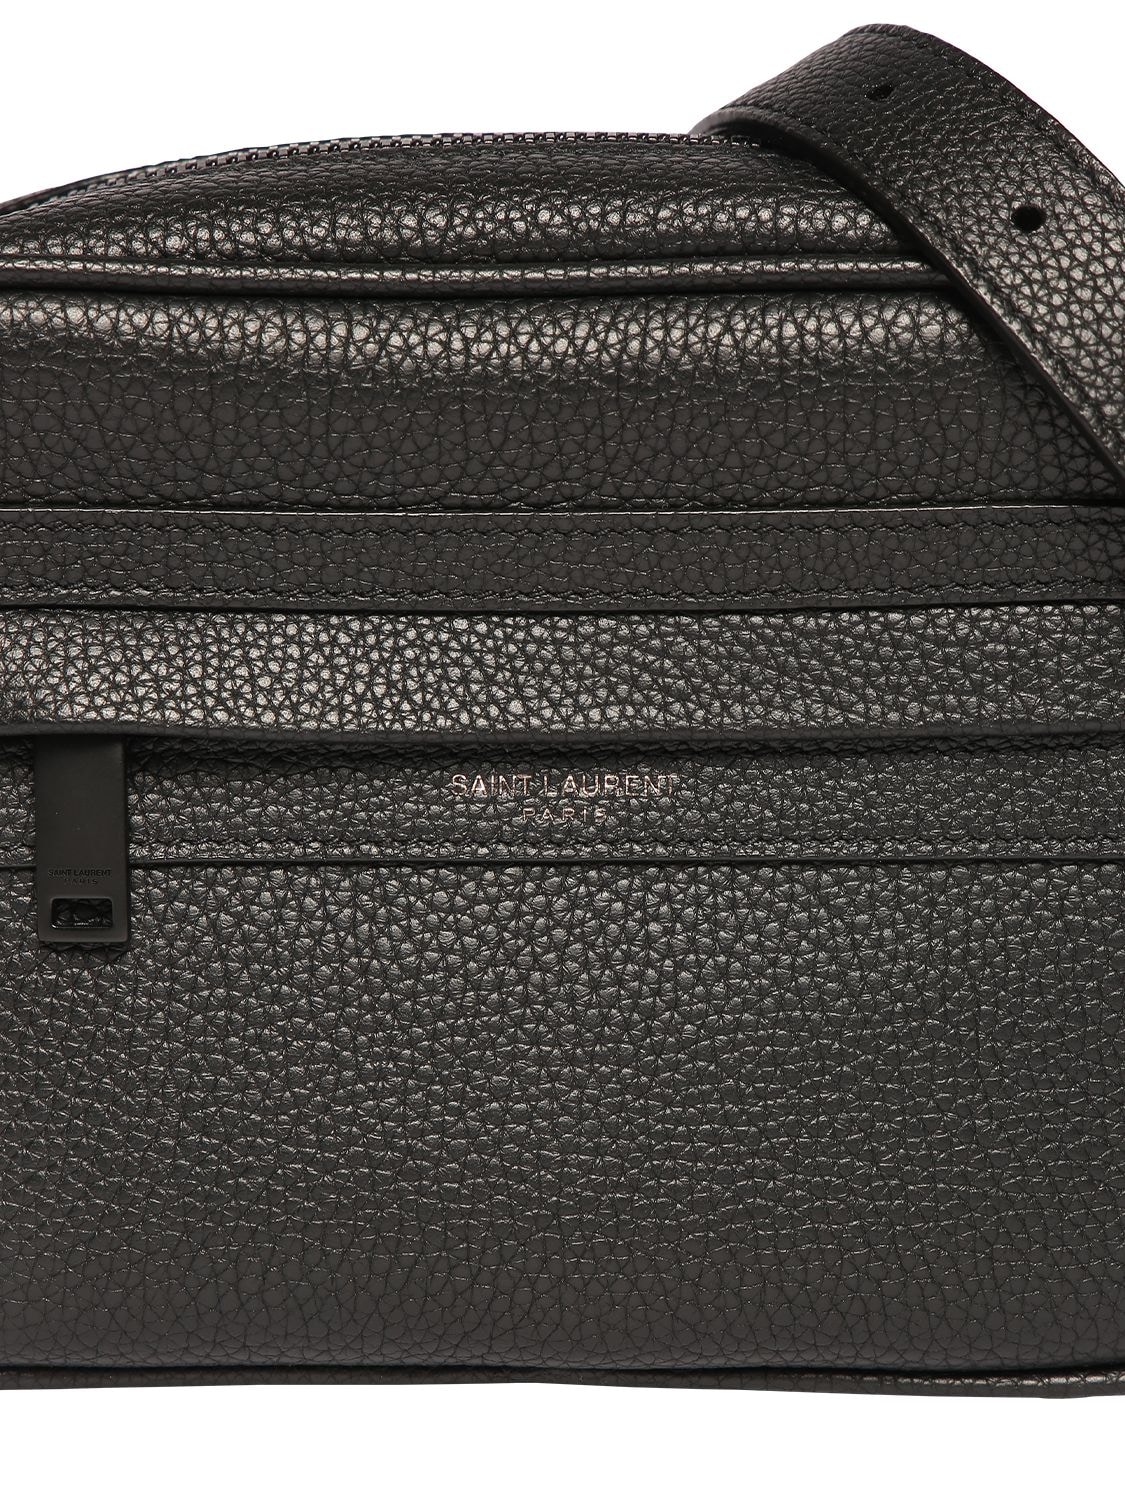 Saint Laurent Monogram Small Textured Leather Camera Bag in Natural